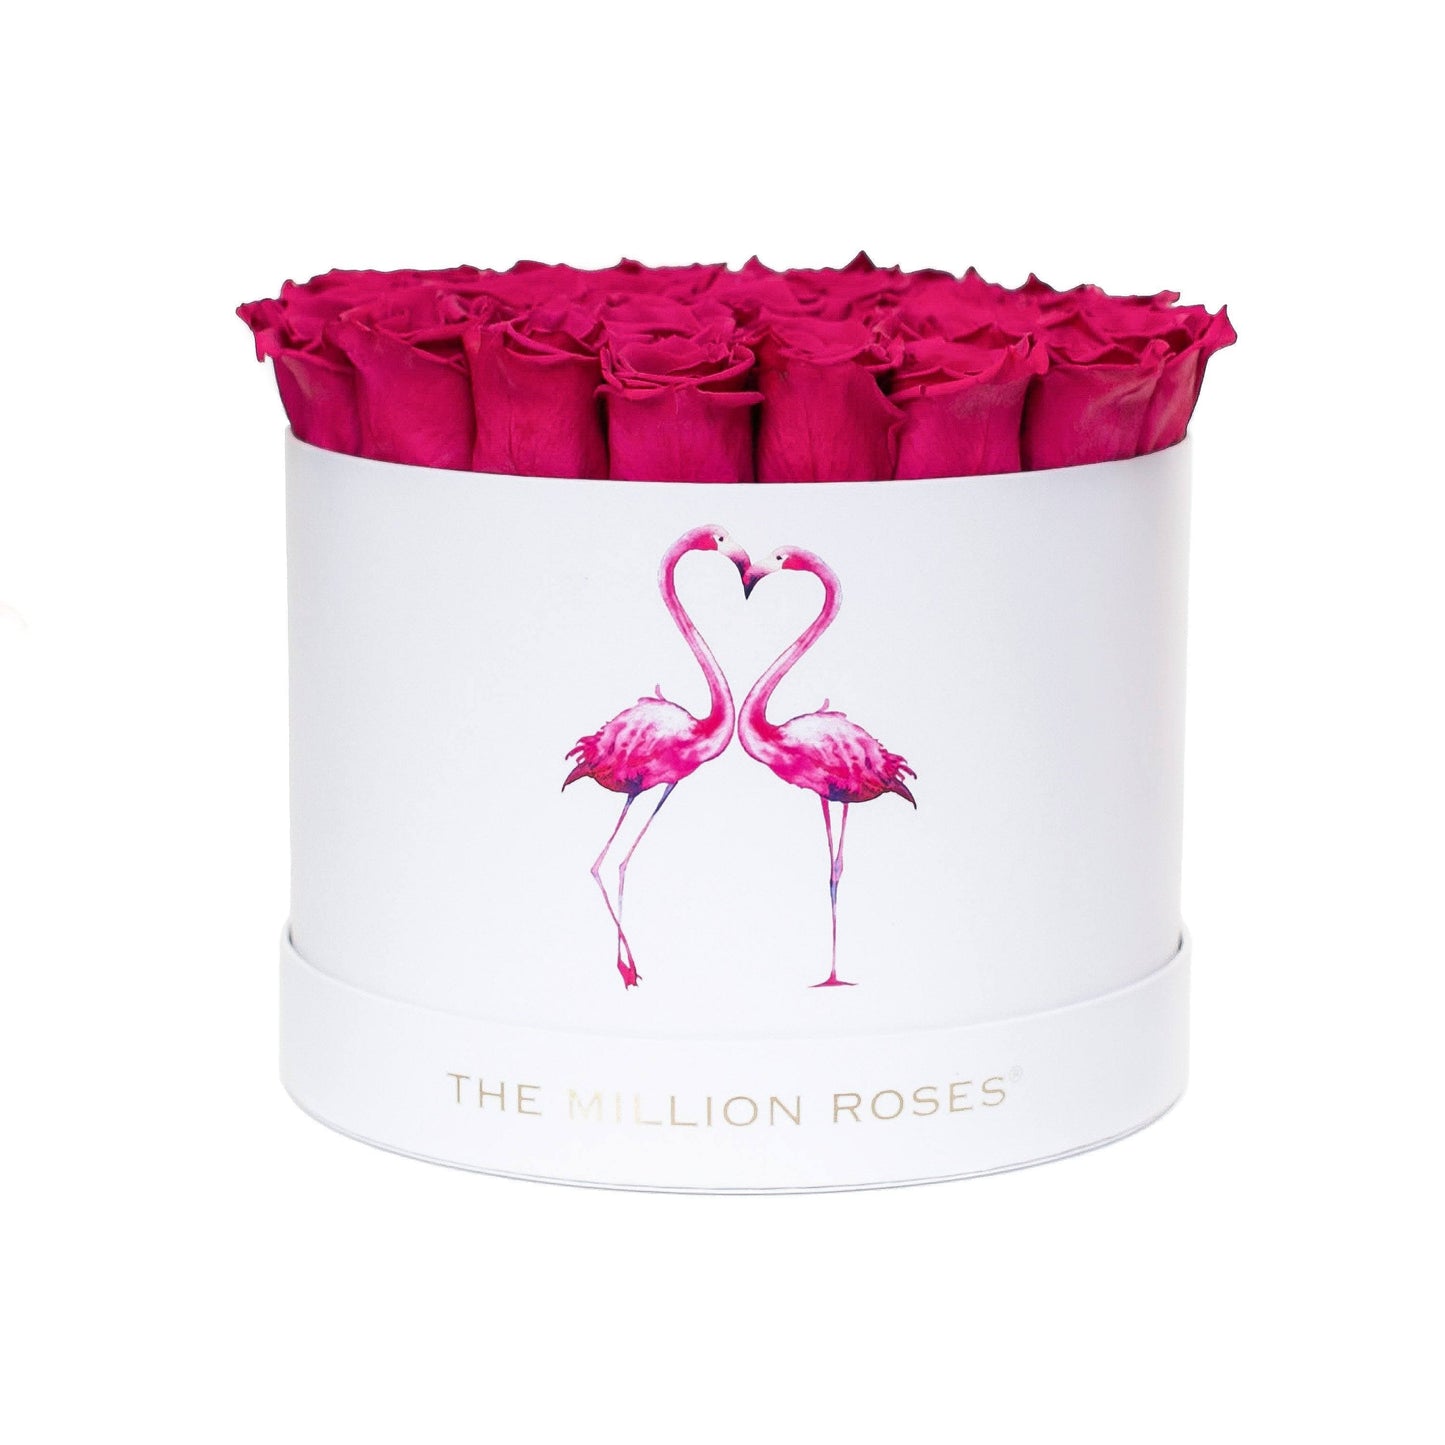 Supreme White Box | Flamingo Edition |  Hot Pink Roses - The Million Roses